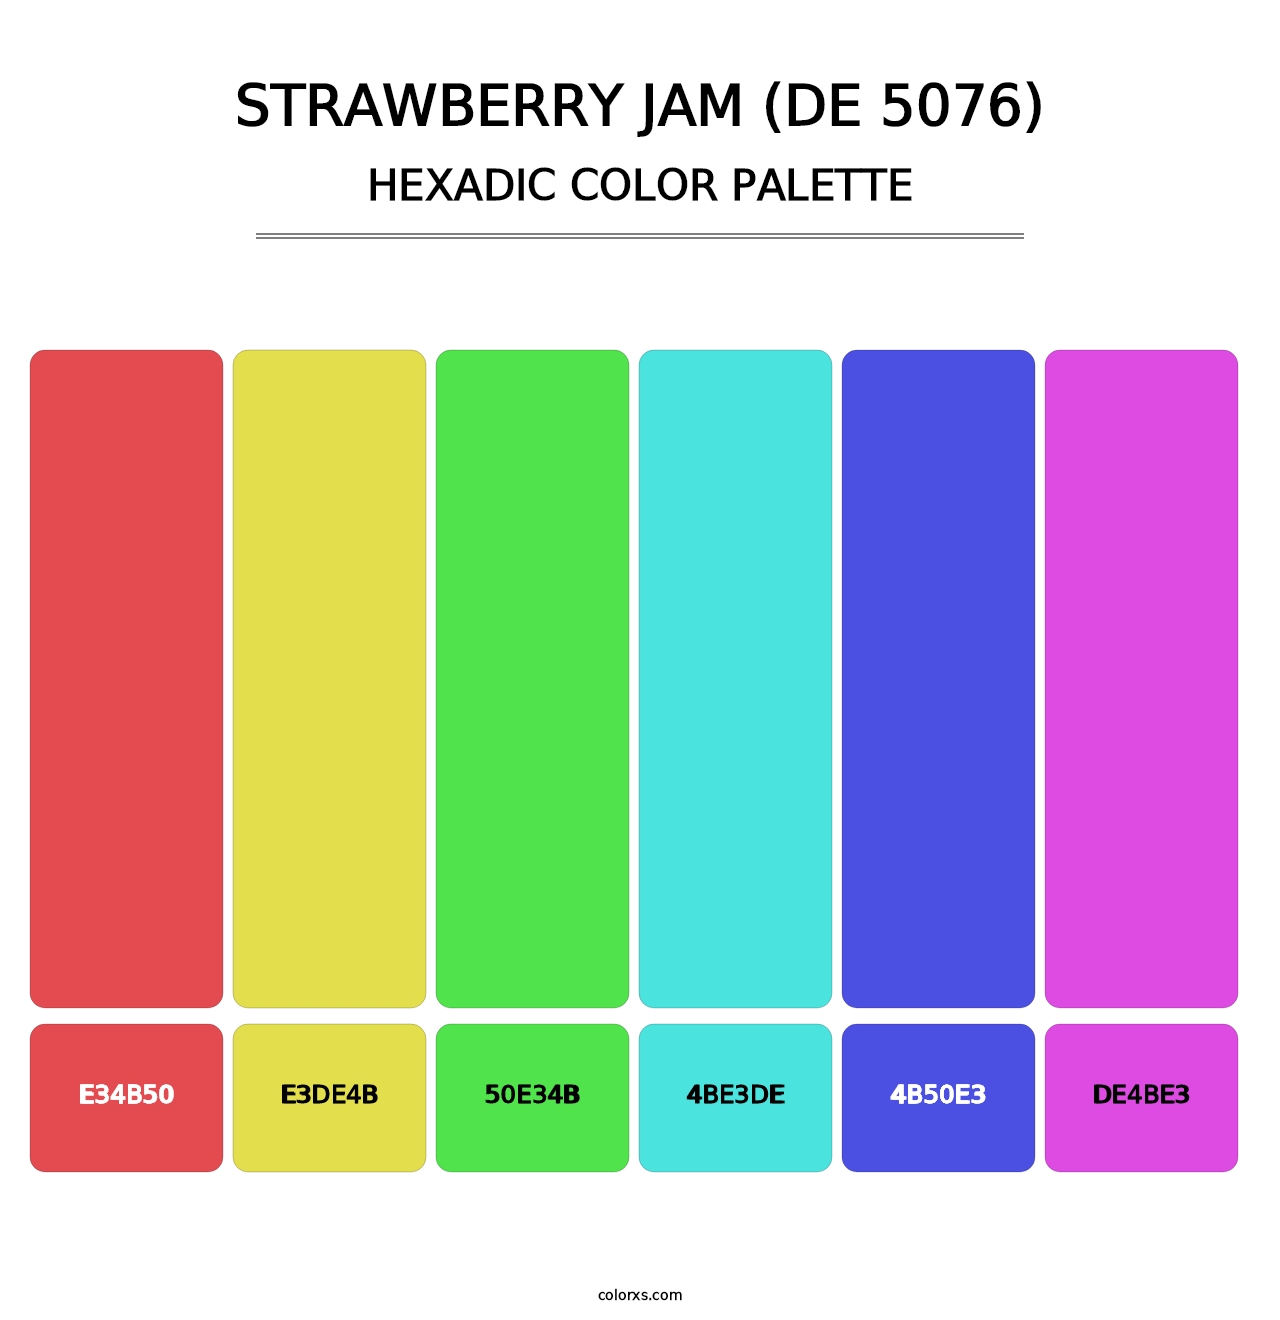 Strawberry Jam (DE 5076) - Hexadic Color Palette